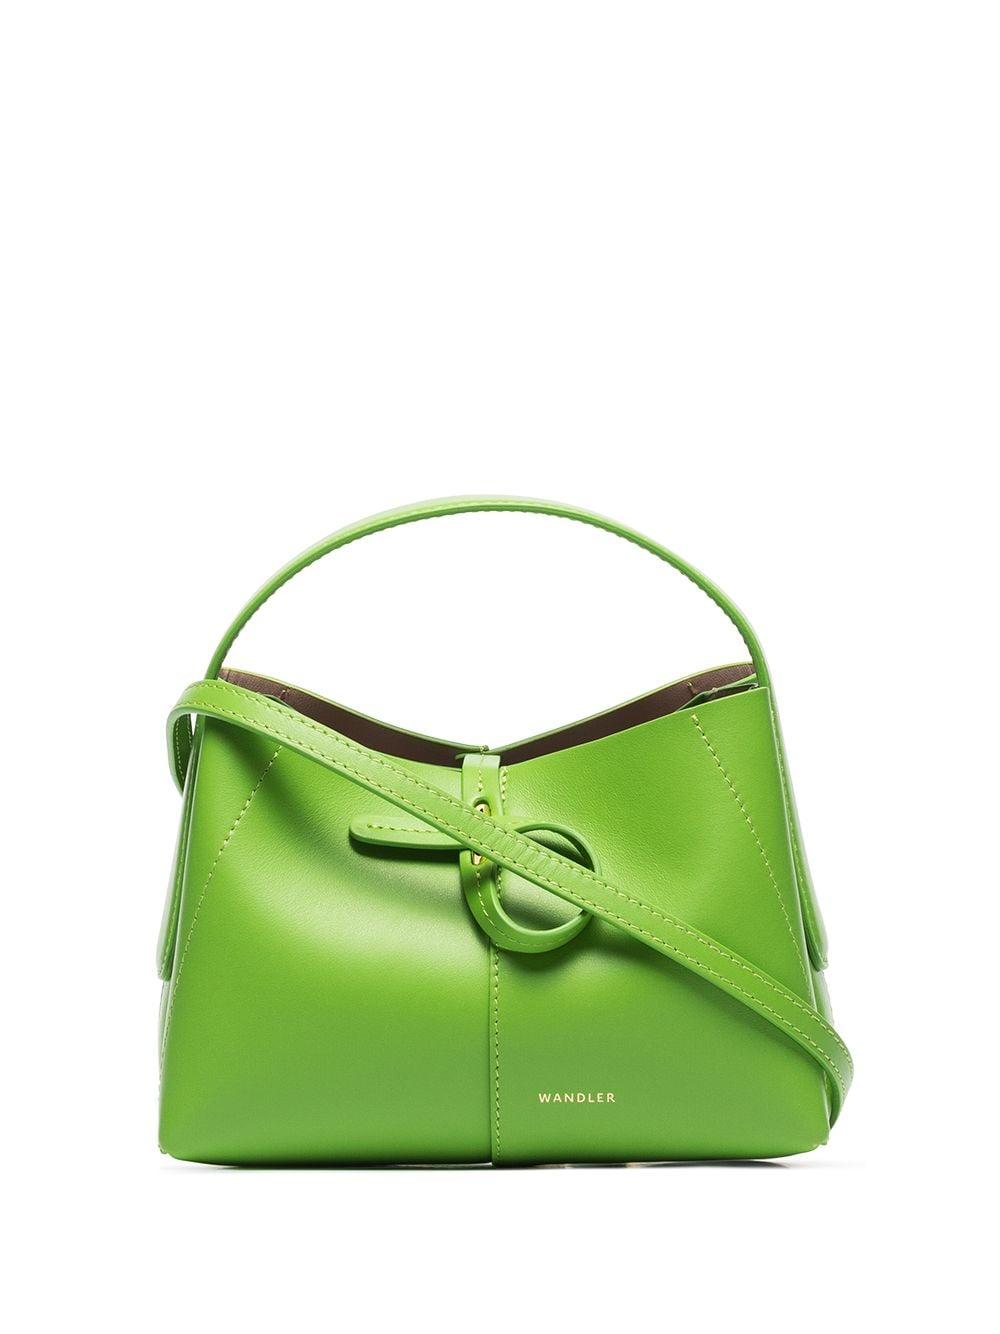 Wandler Ava Leather Mini Bag in Green | Lyst